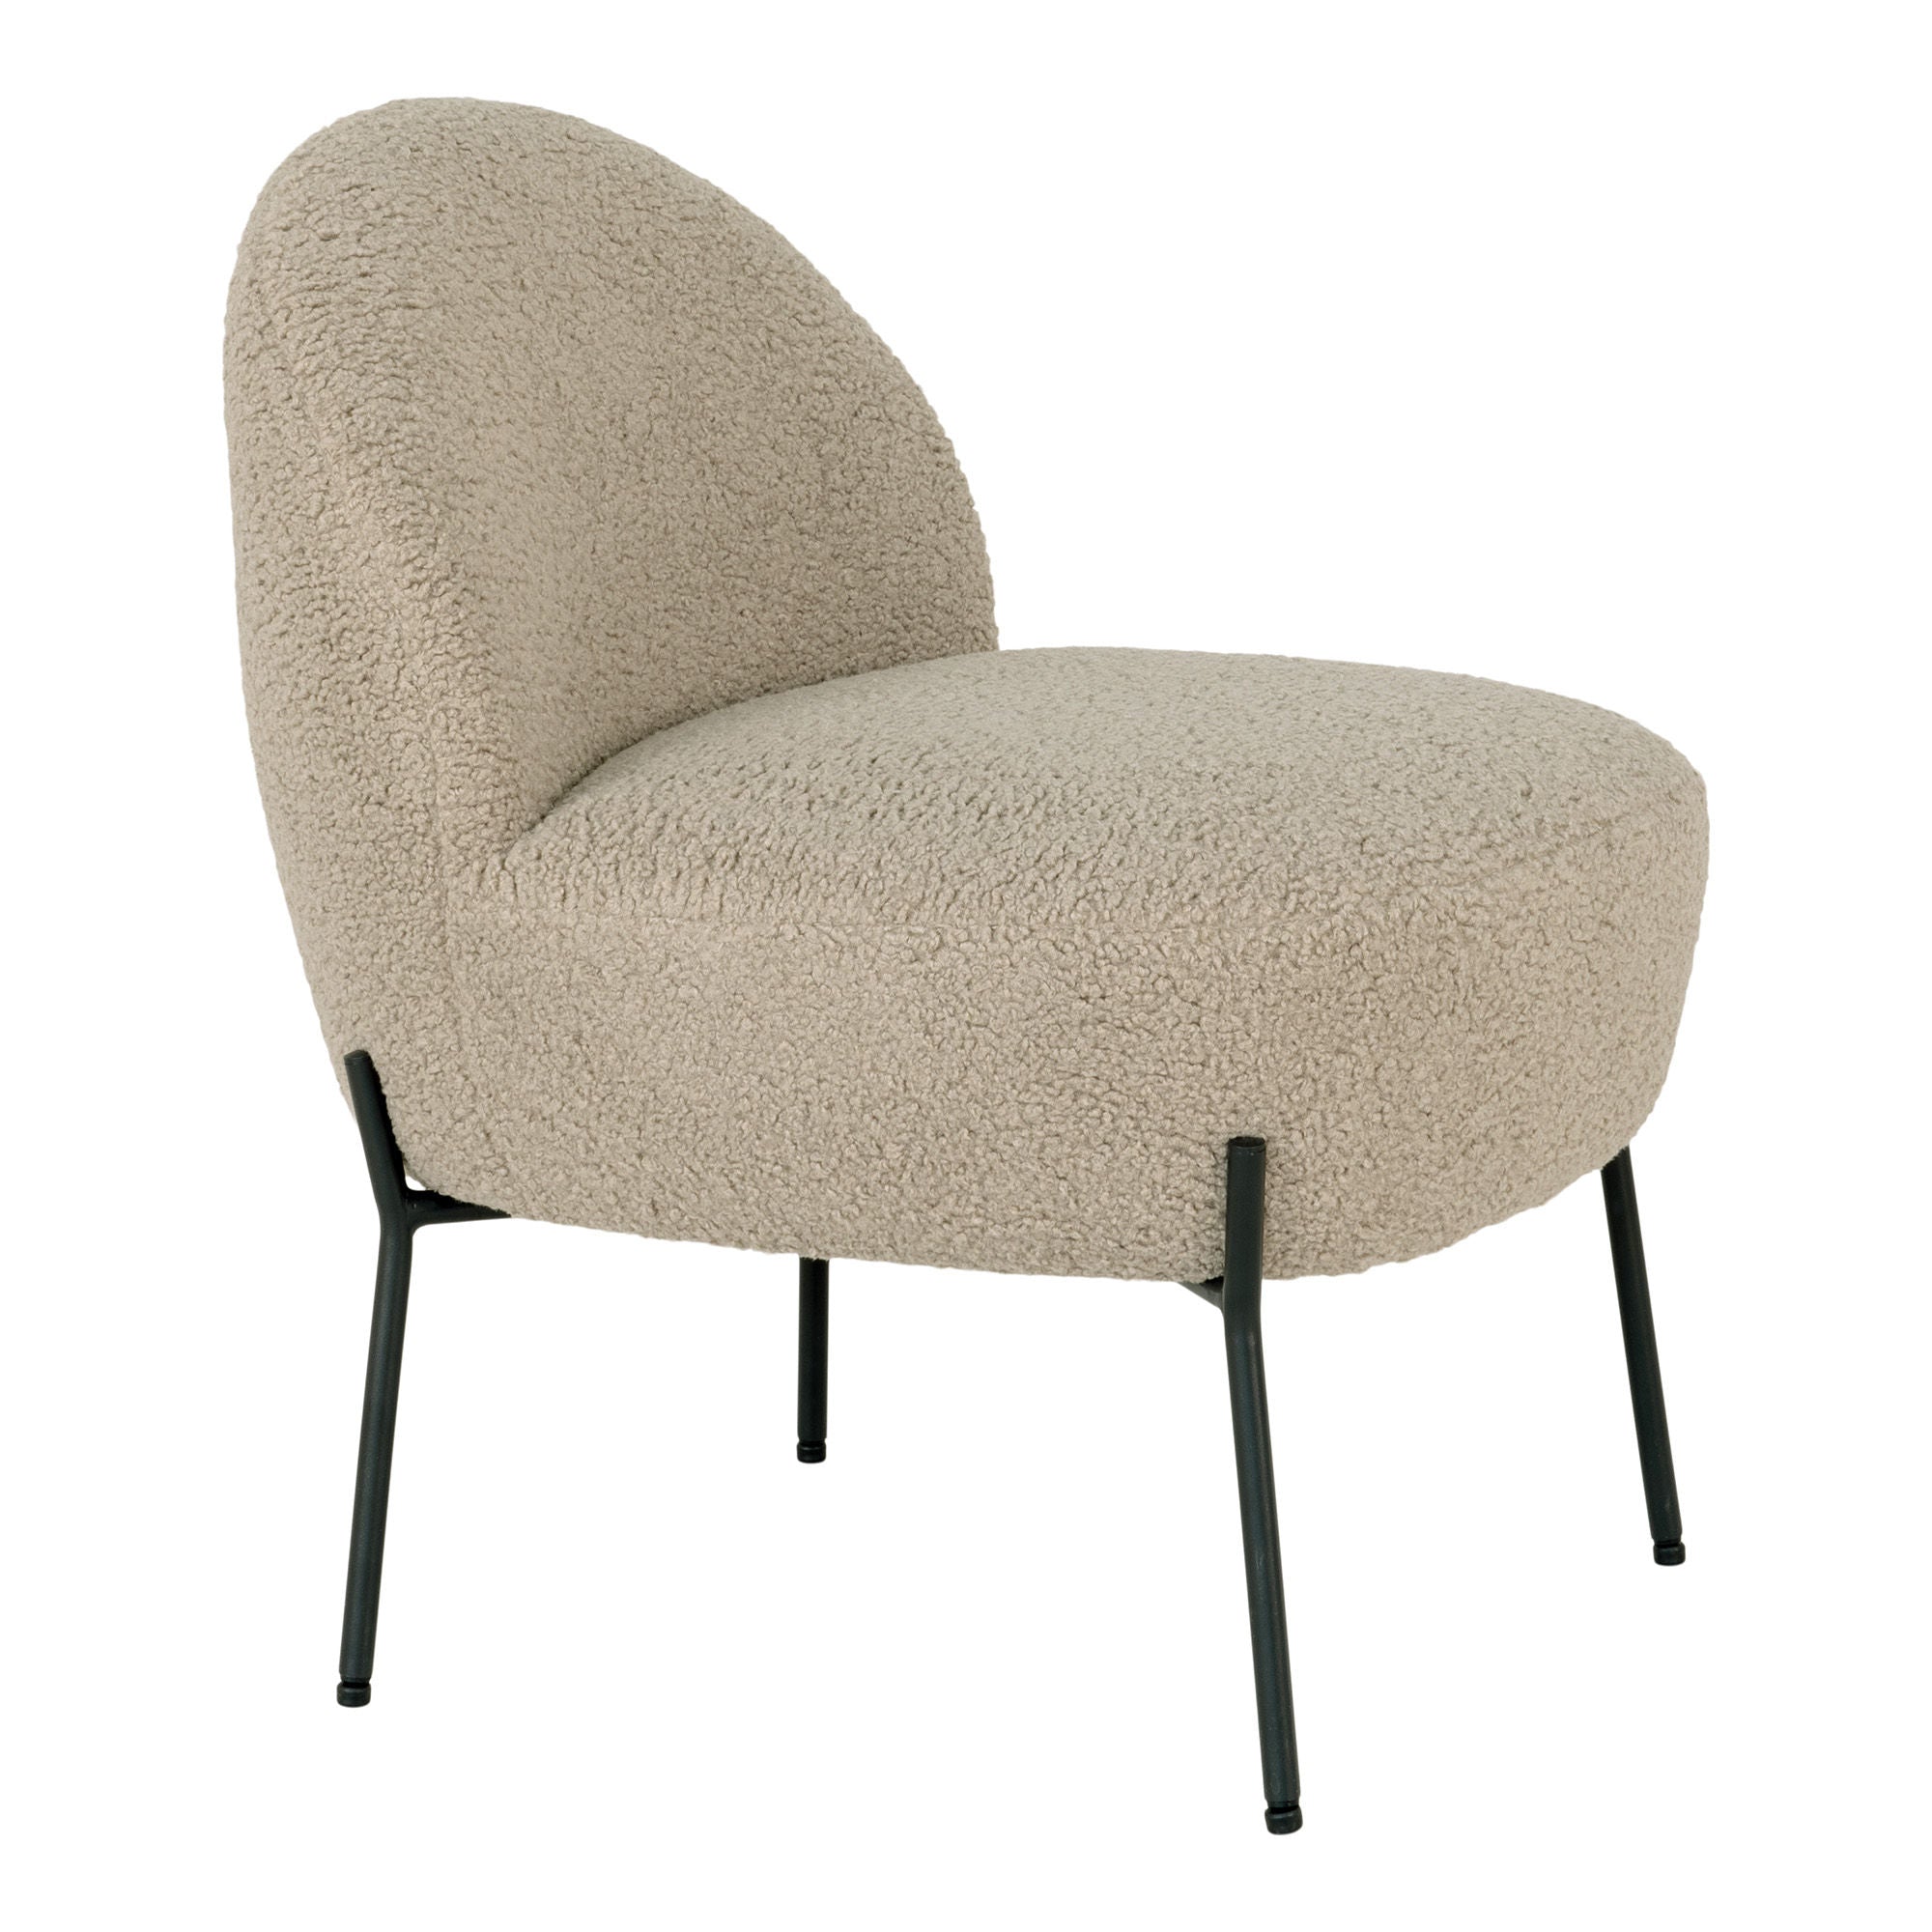 House Nordic - Merida Lounge chair